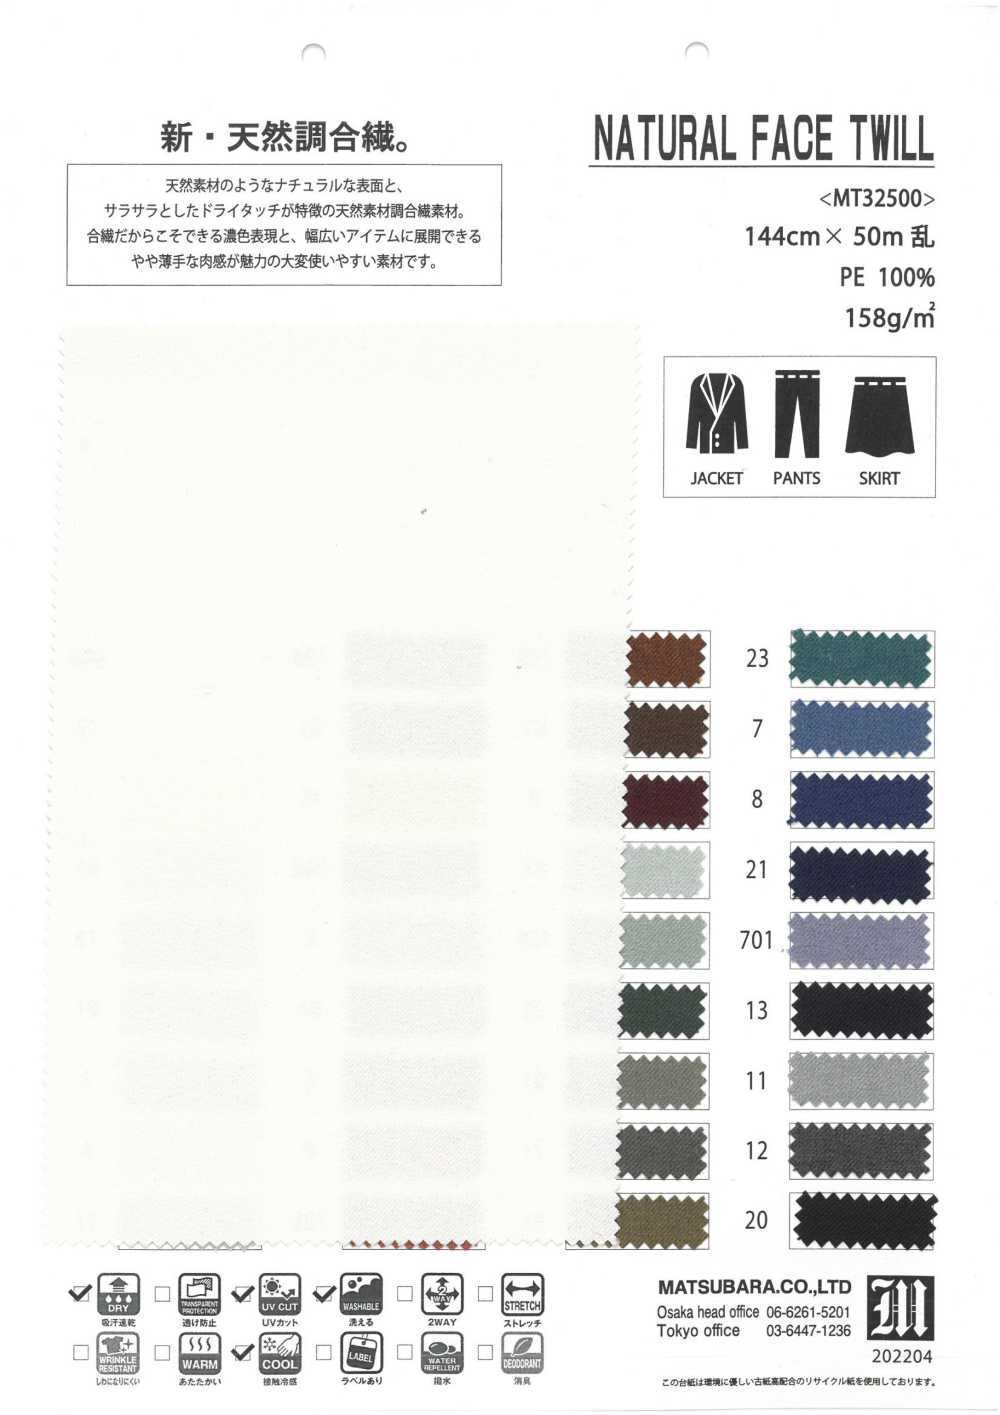 MT32500 NATURAL FACE TWILL[Textile / Fabric] Matsubara